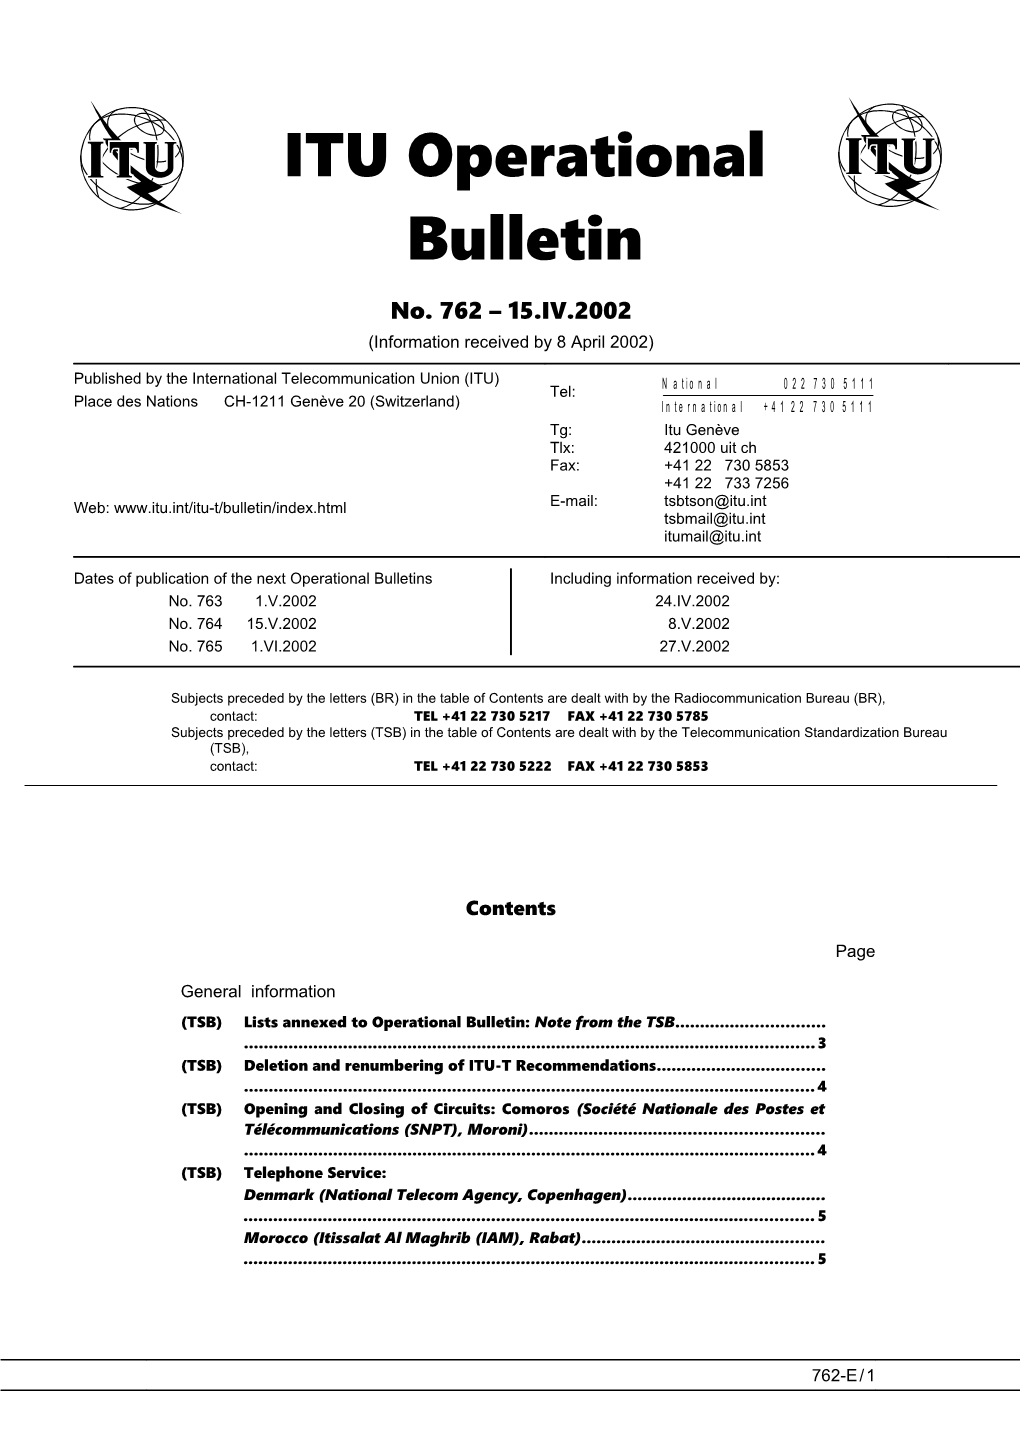 ITU Operational Bulletin 762 - 15.IV.2002